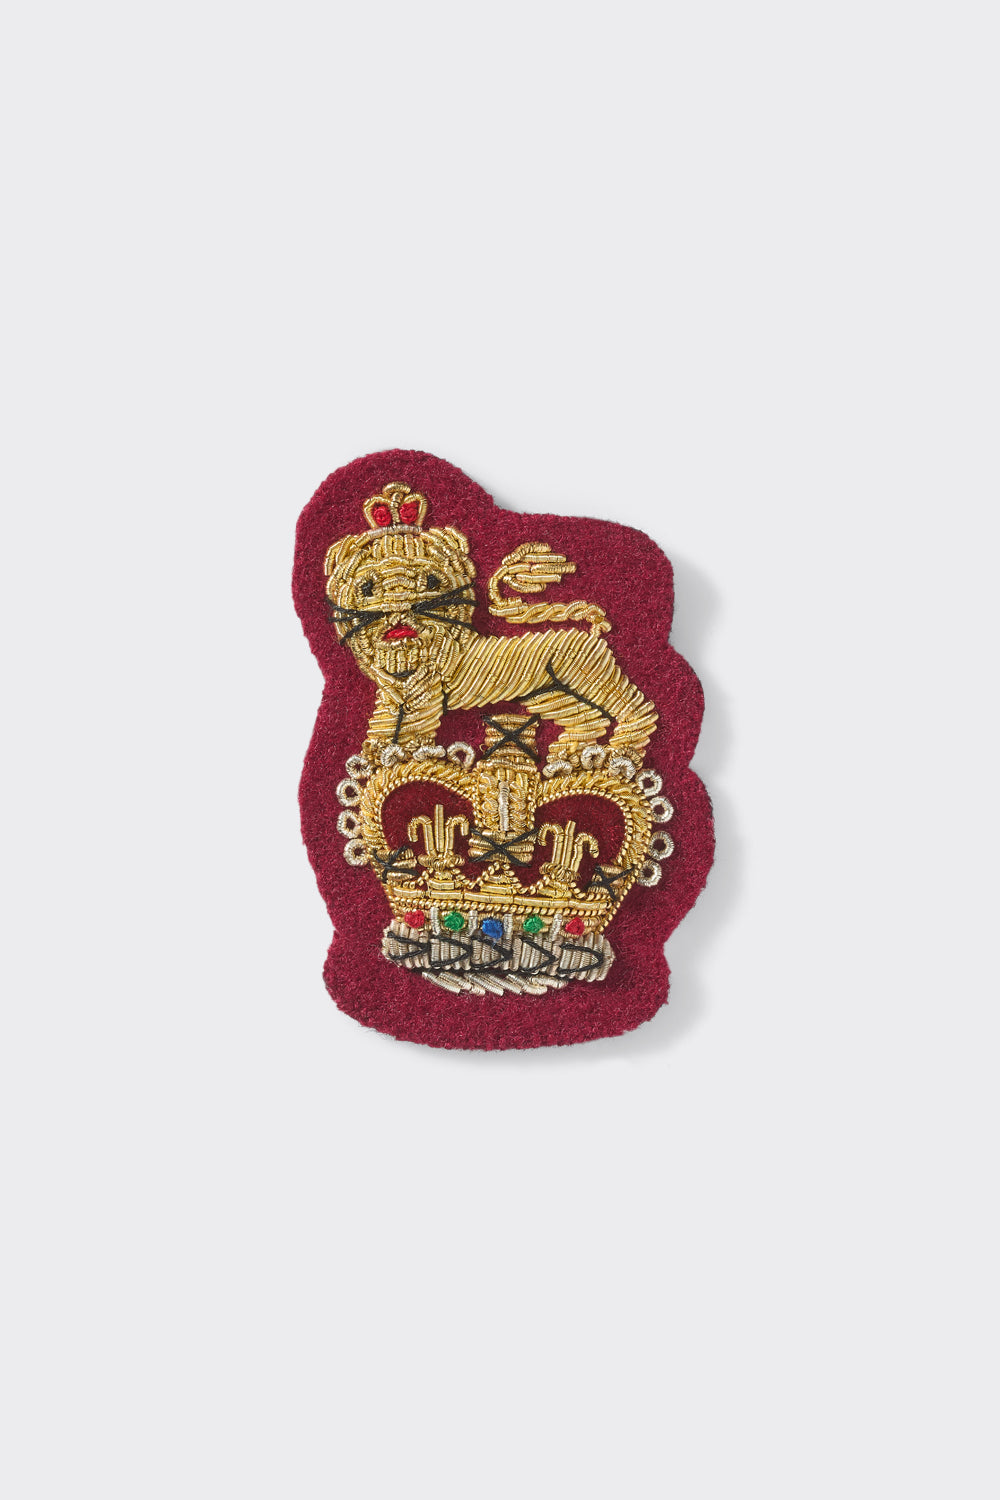 British Army Staff Colonels Beret Badge